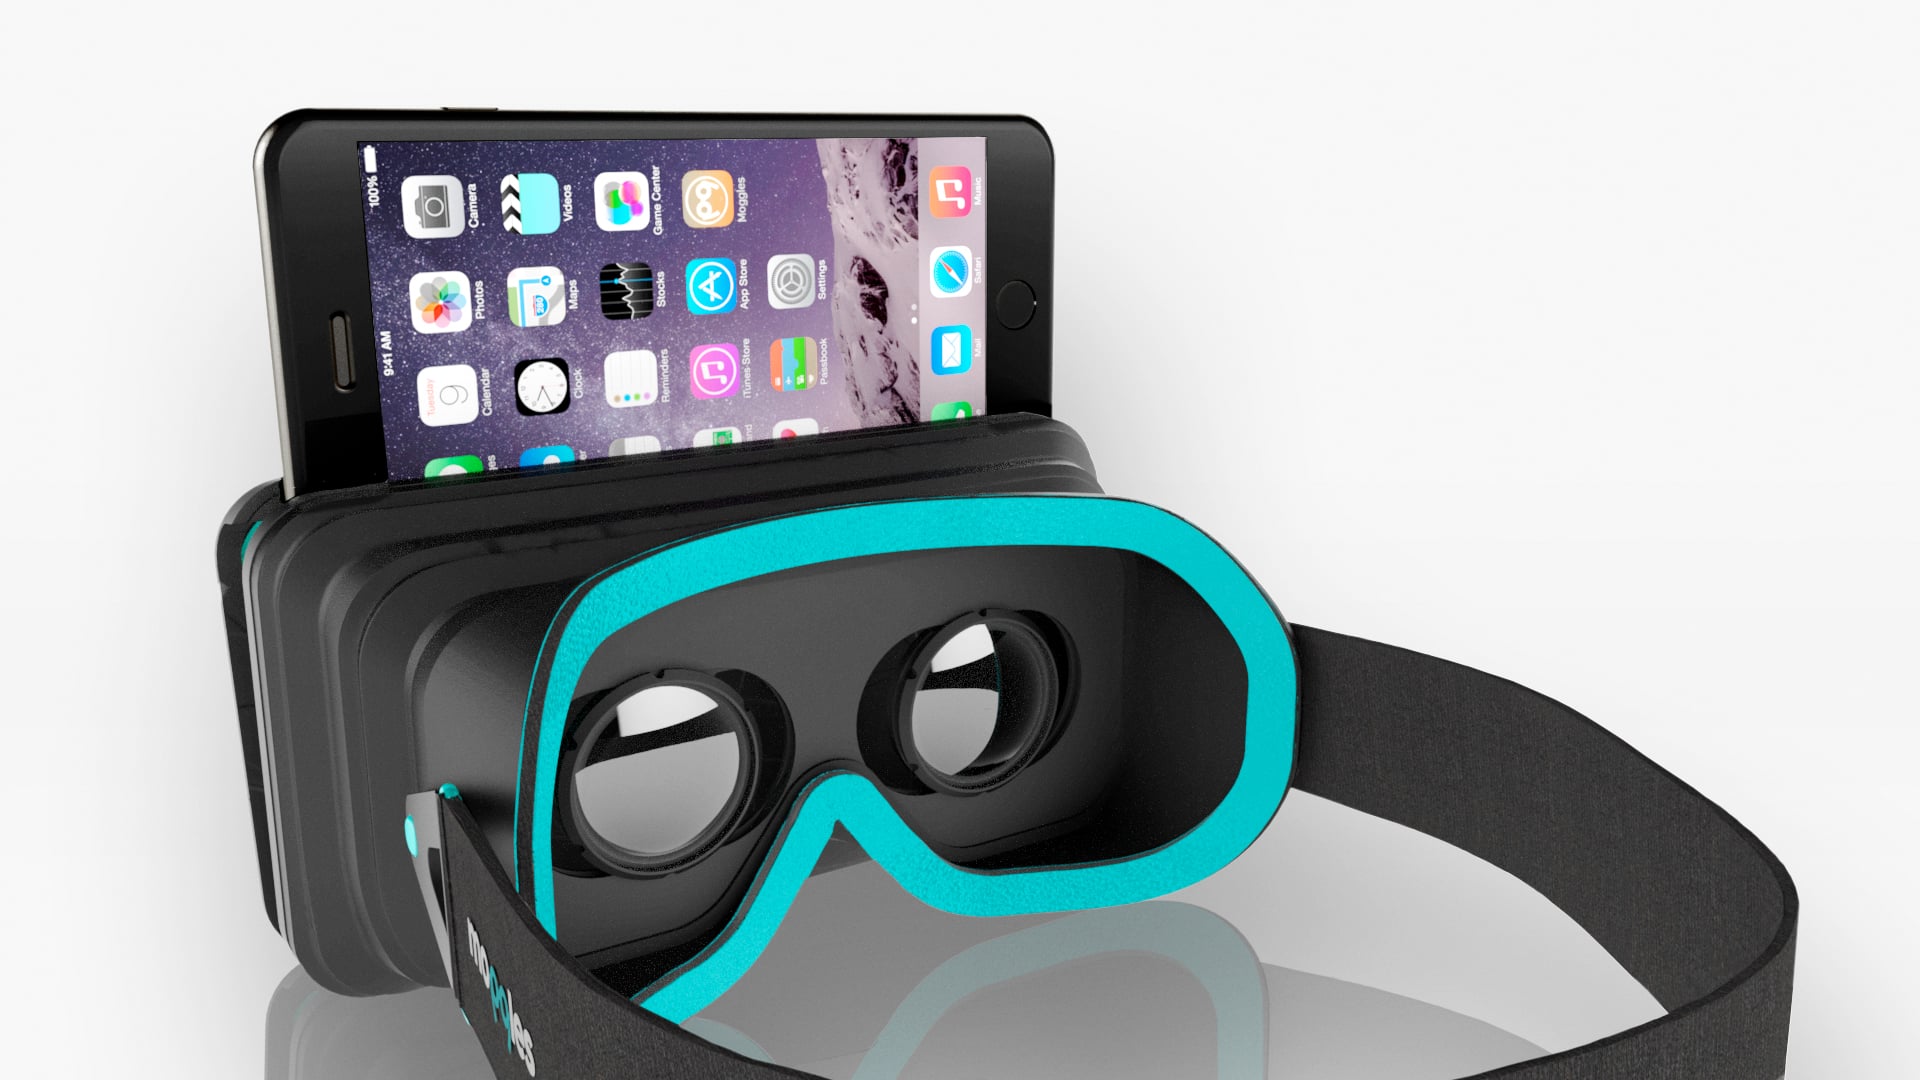 Vr rx. Очки виртуальной реальности. Игровые очки. Виртуальные очки для смартфона. VR шлем для телефона.